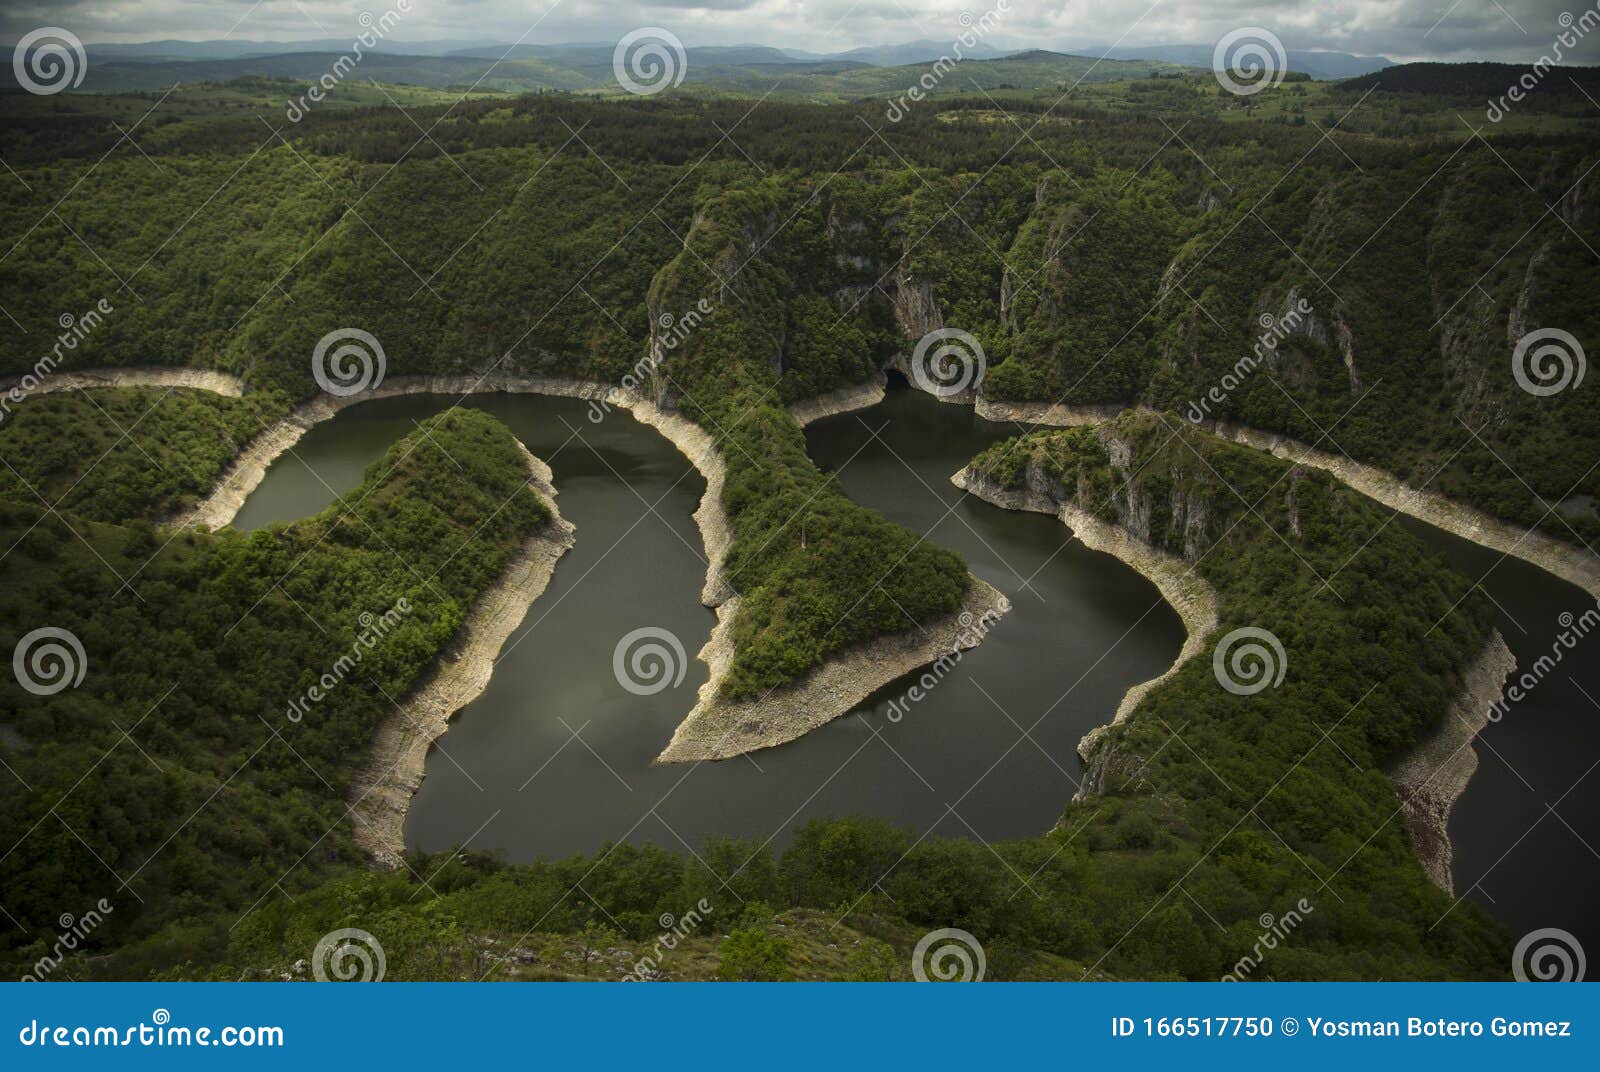 remote uvac river in serbia